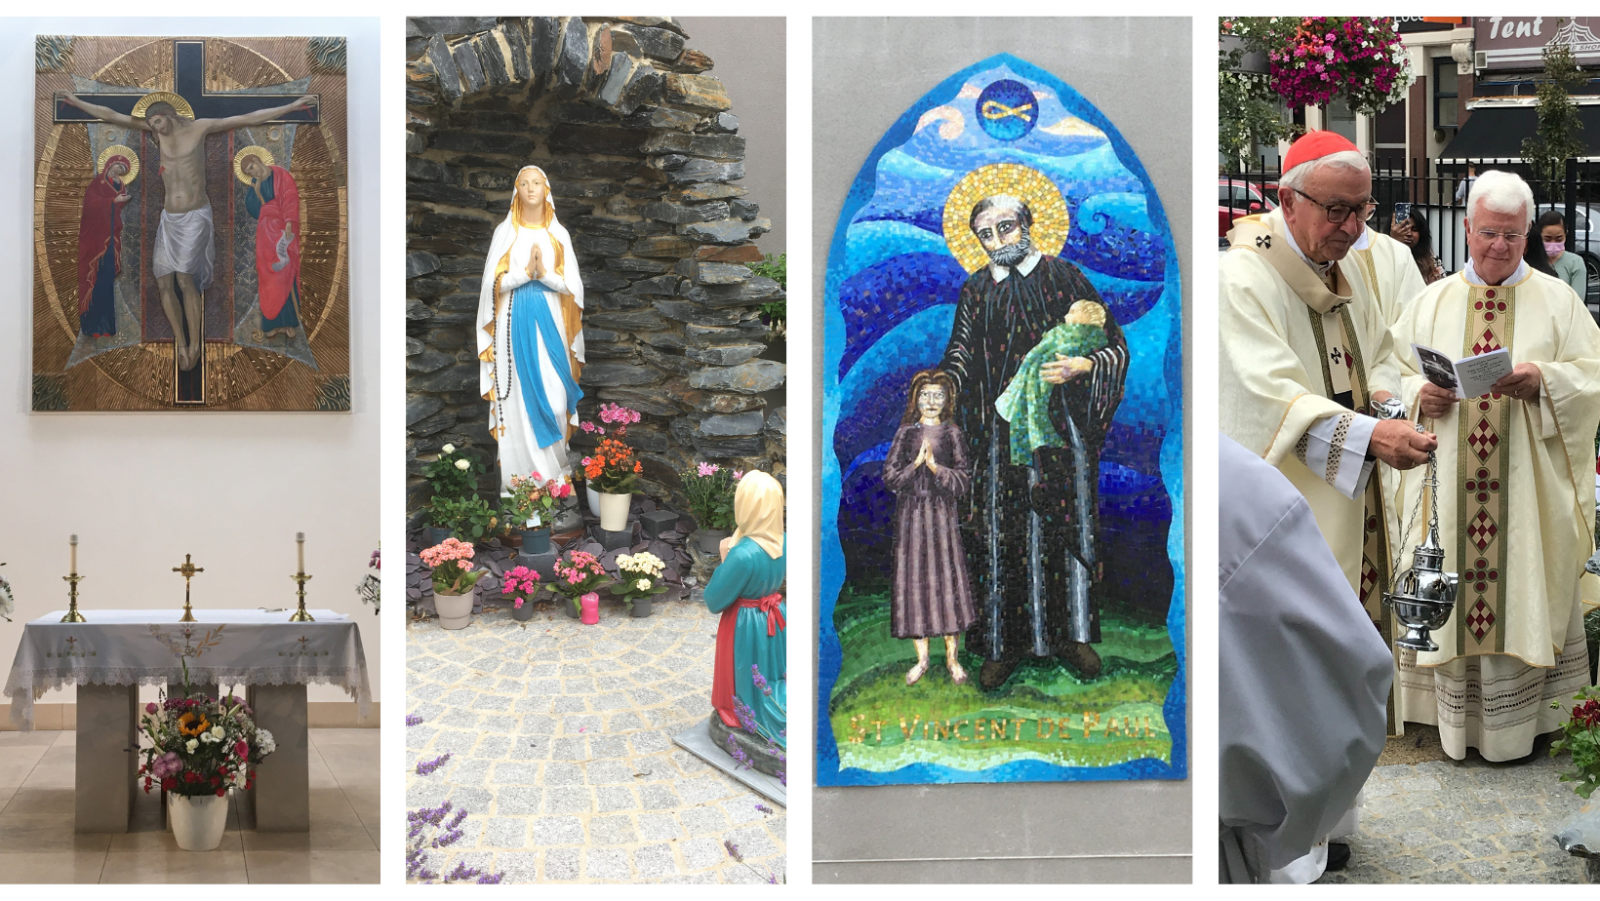 Cardinal dedicates altar and blesses artwork and grotto at Harrow Road